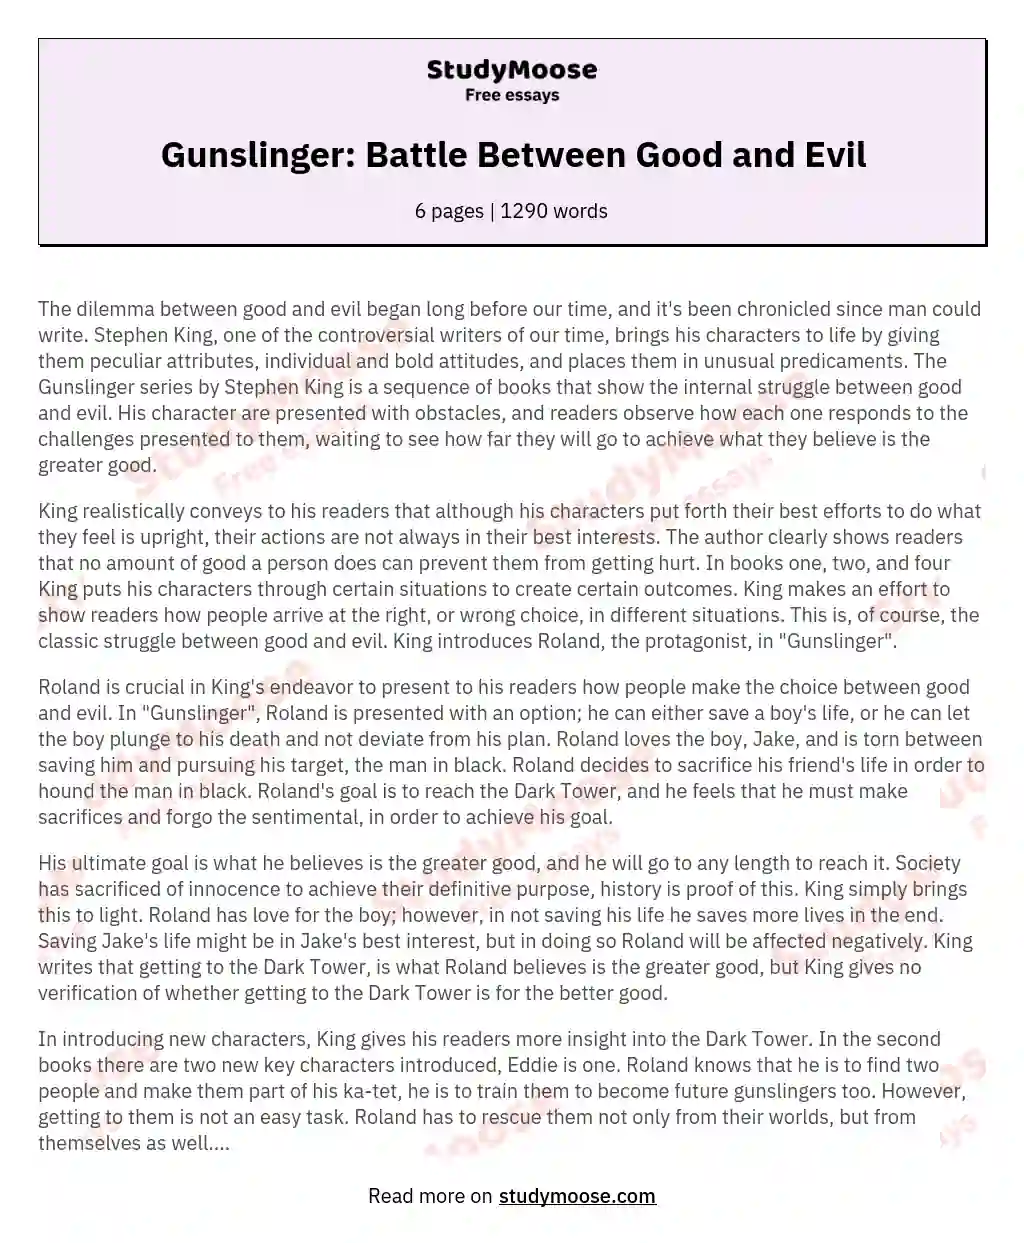 Gunslinger: Battle Between Good and Evil essay